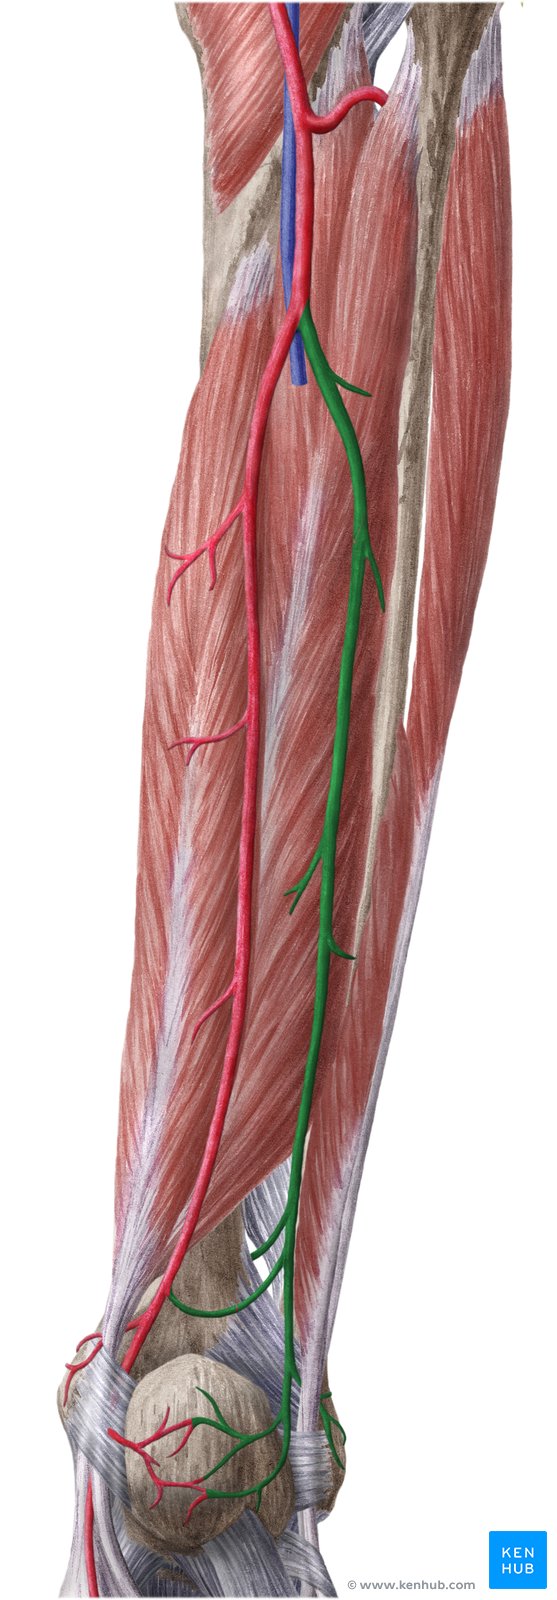 Fibular artery - posterior view